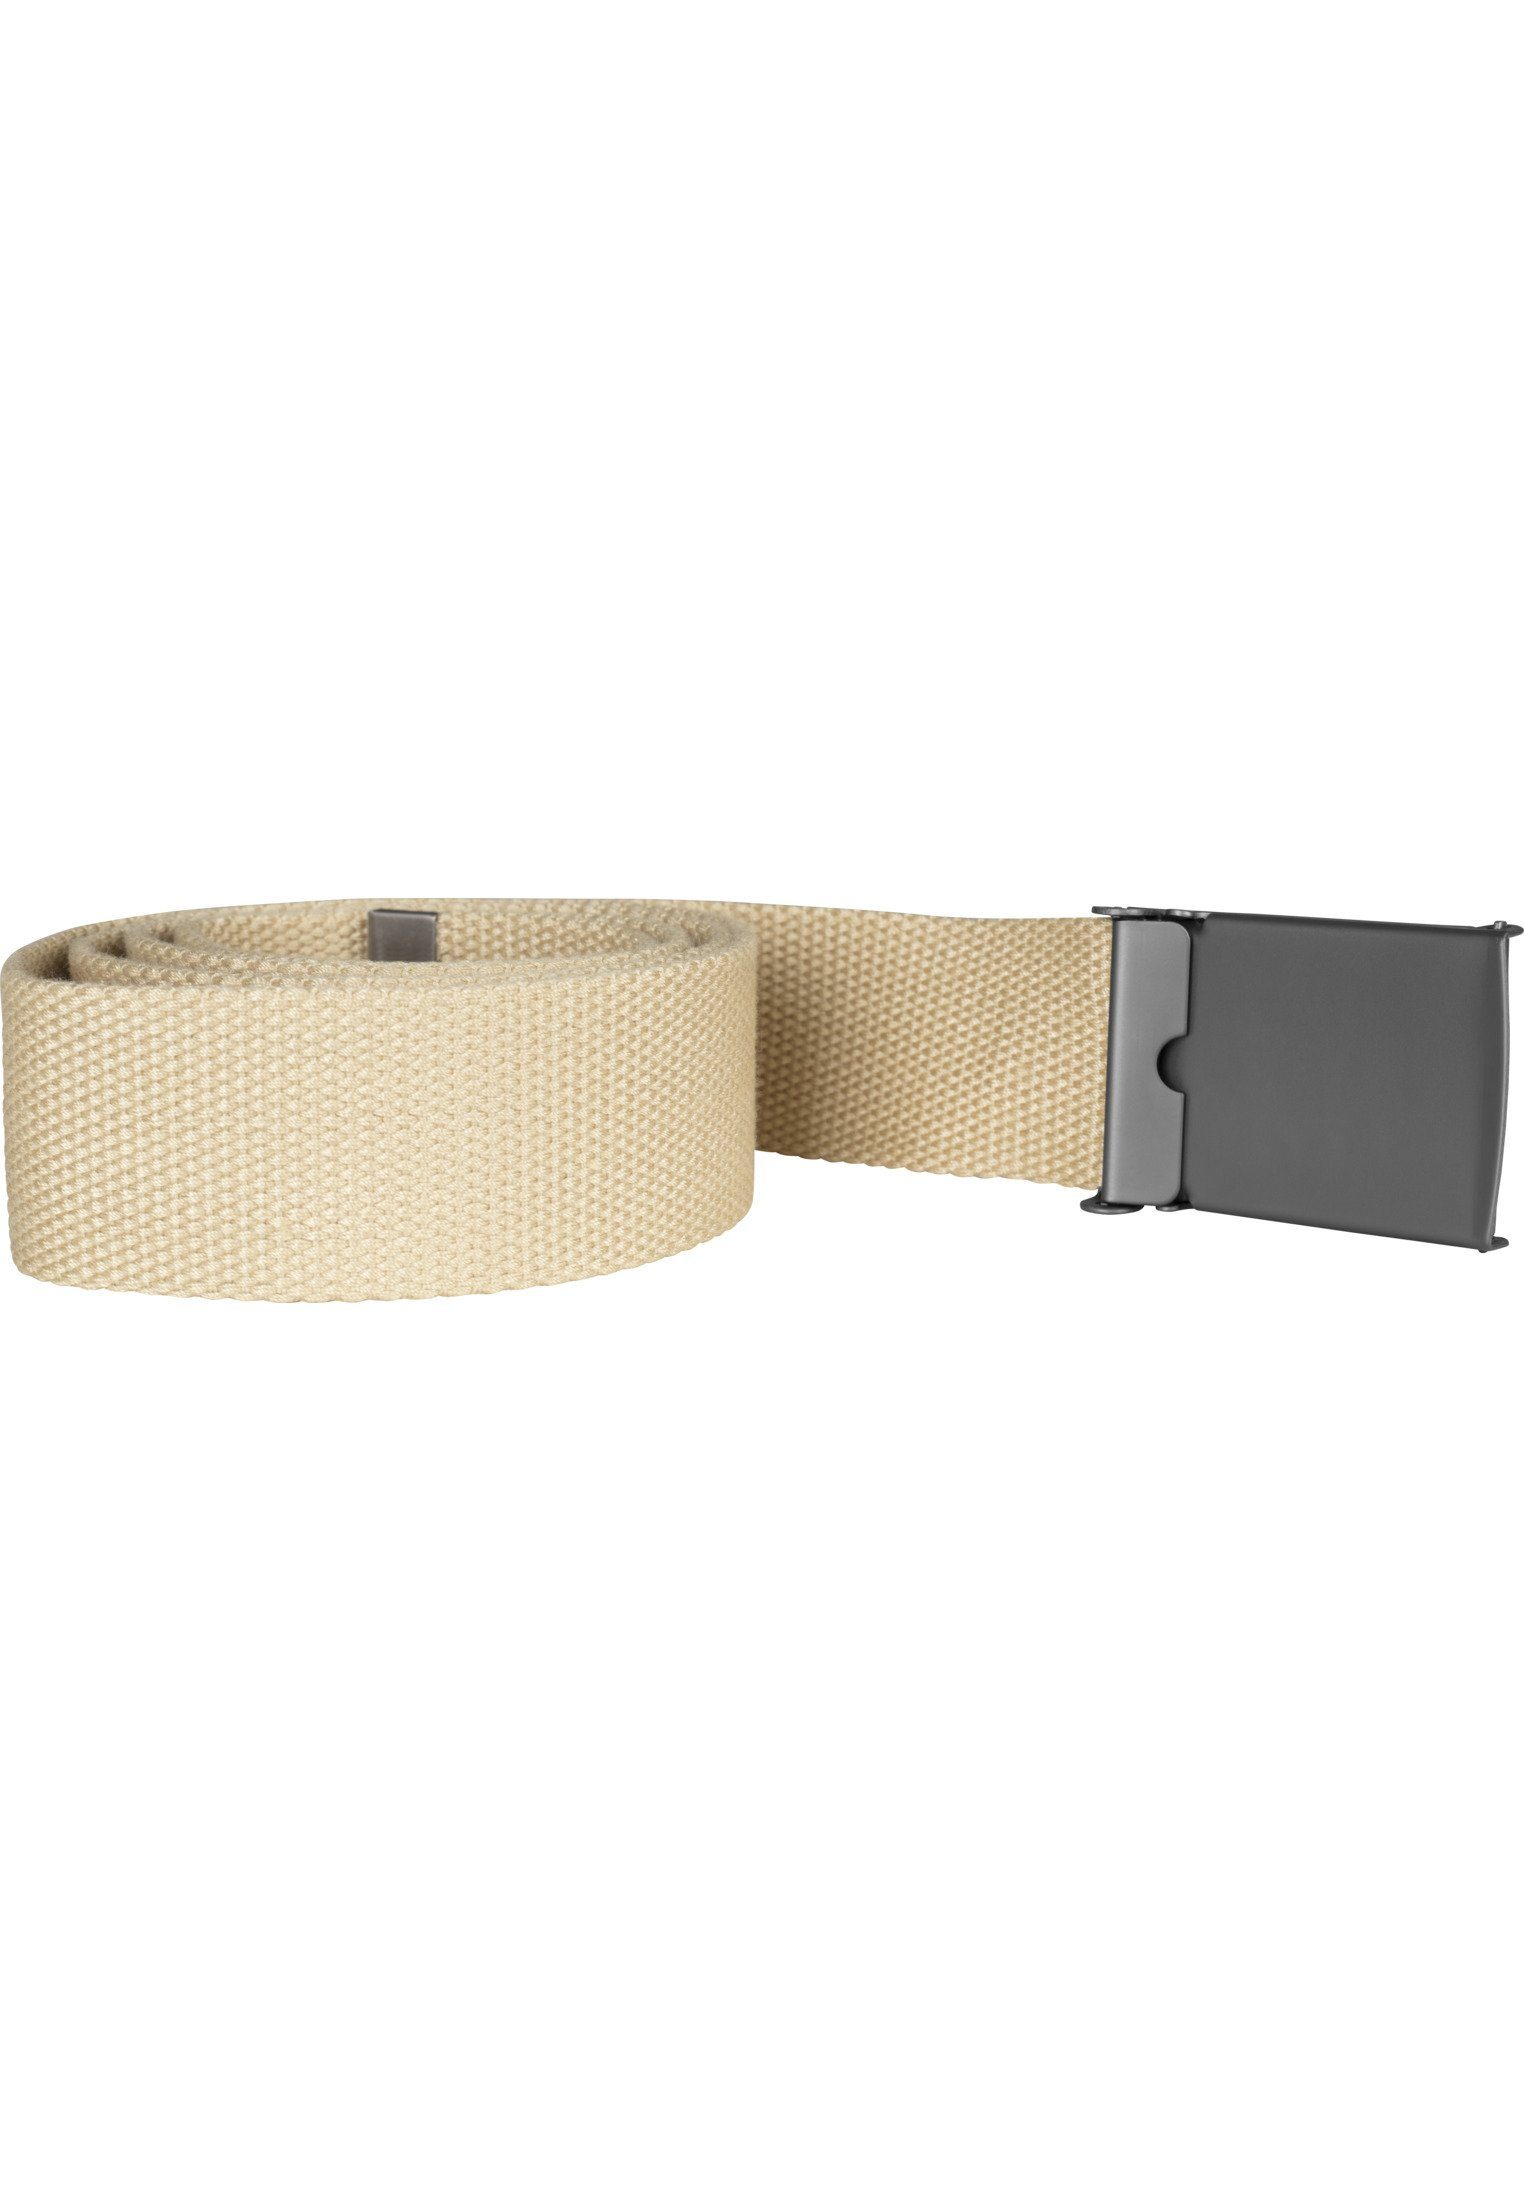 Hüftgürtel Accessoires URBAN Belts beige Canvas CLASSICS